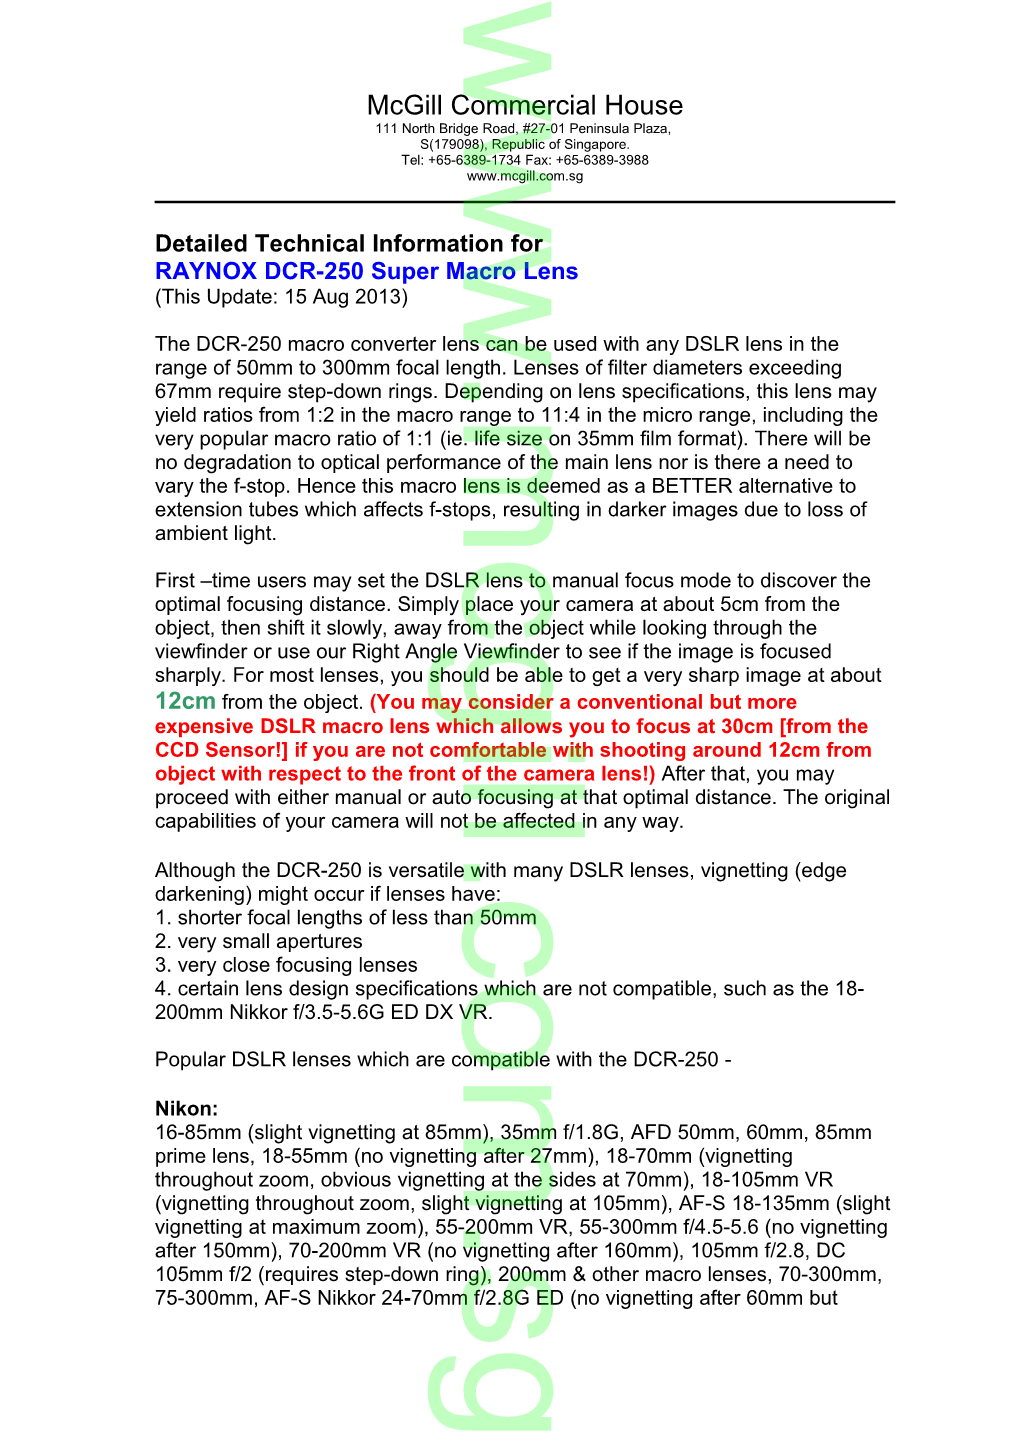 Raynox DCR-250 Technical Information